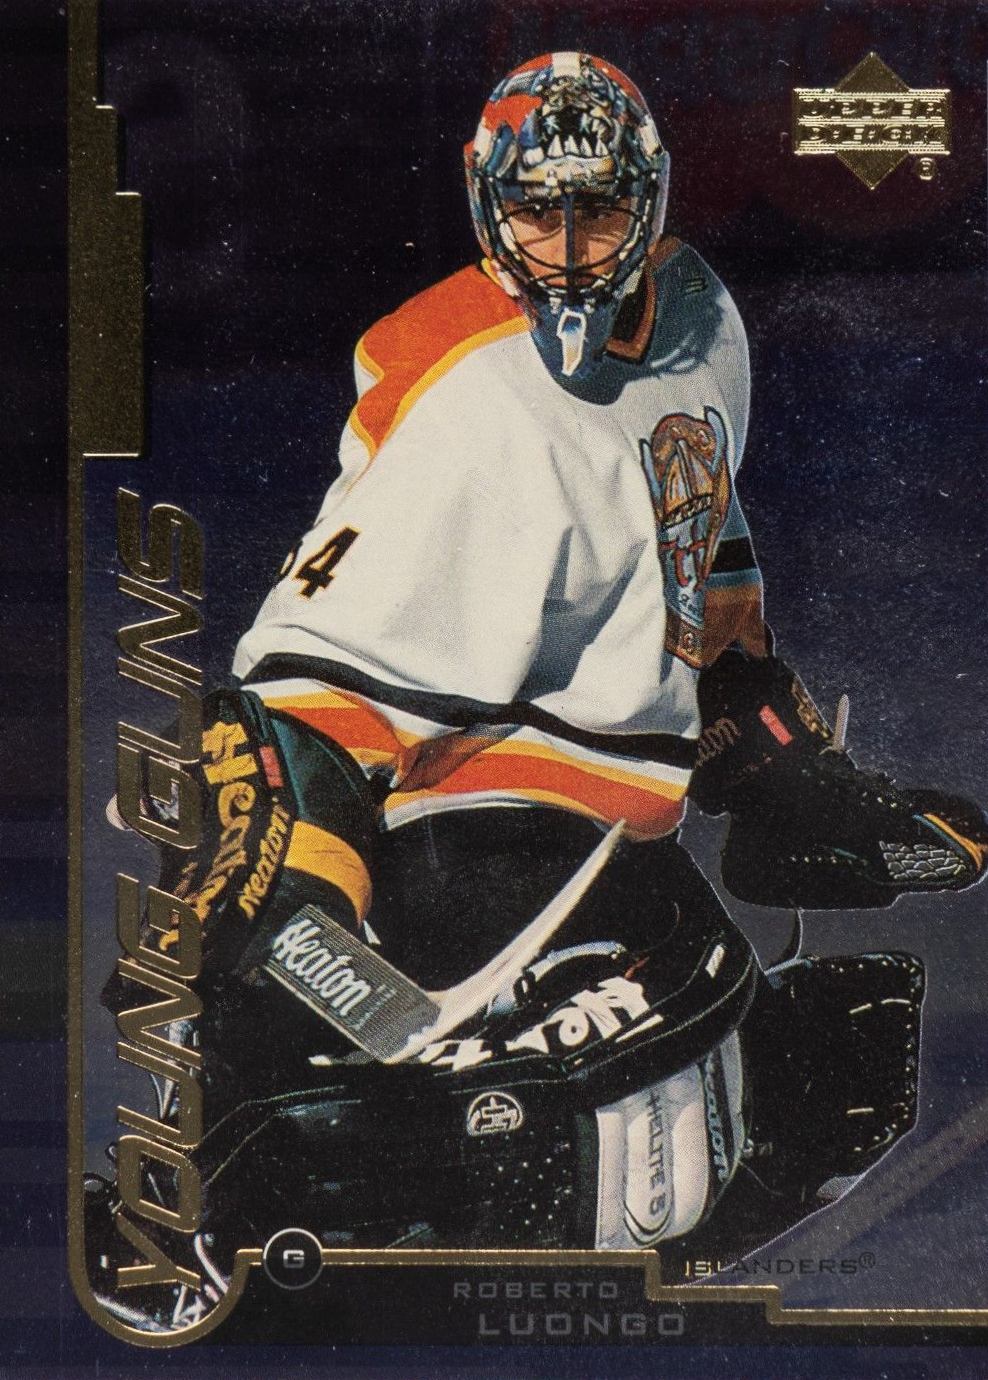 1999 Upper Deck Roberto Luongo #163 Hockey Card